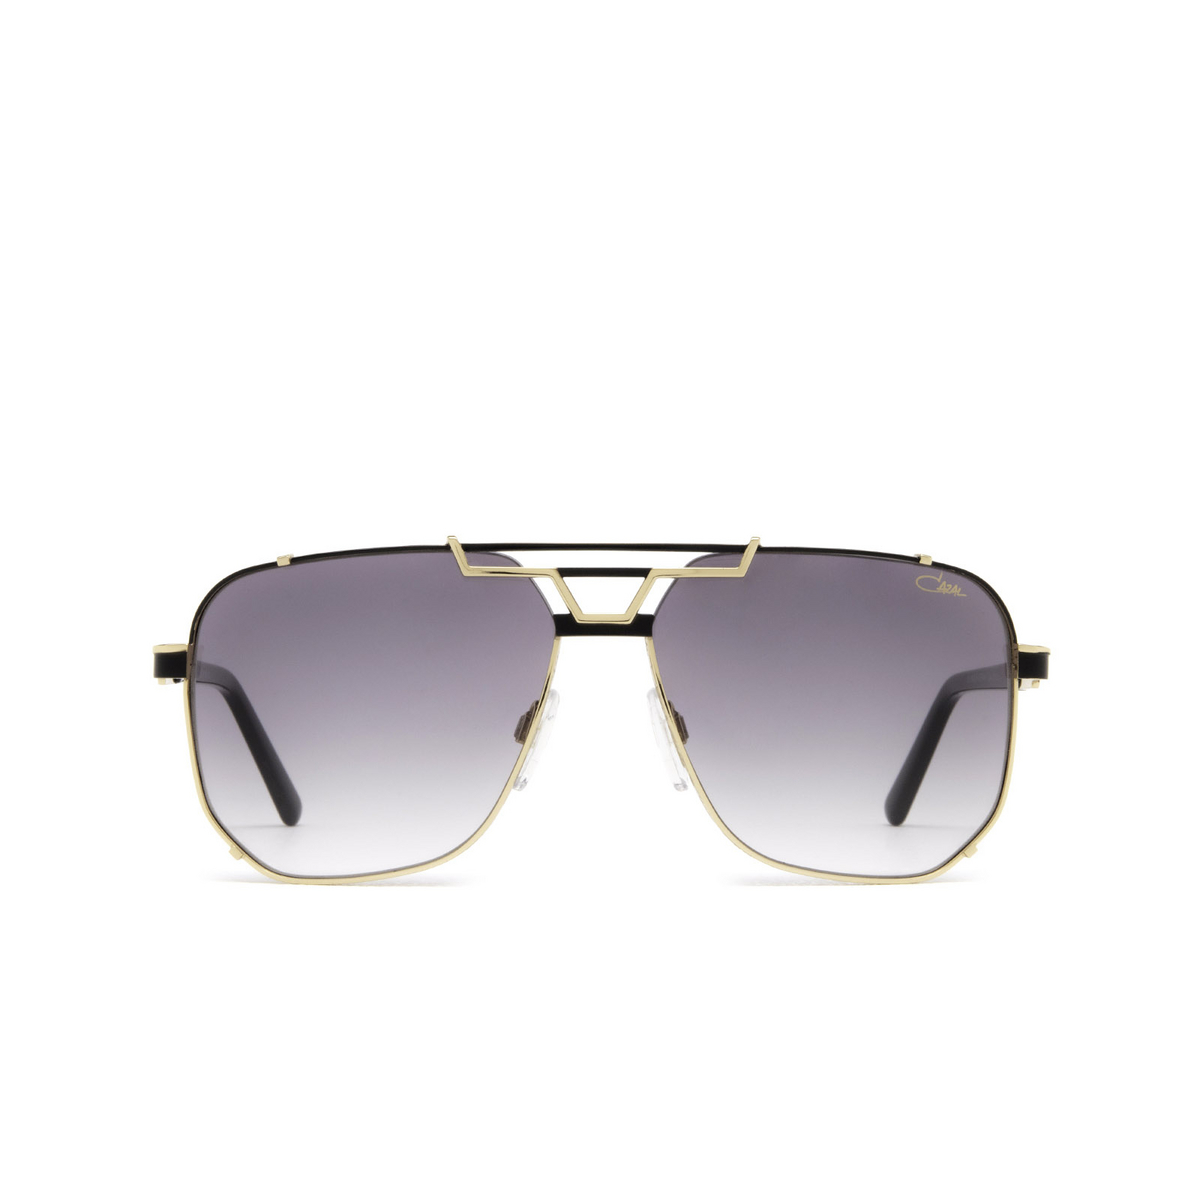 Cazal 9090 Sunglasses 001 Black - Gold - front view